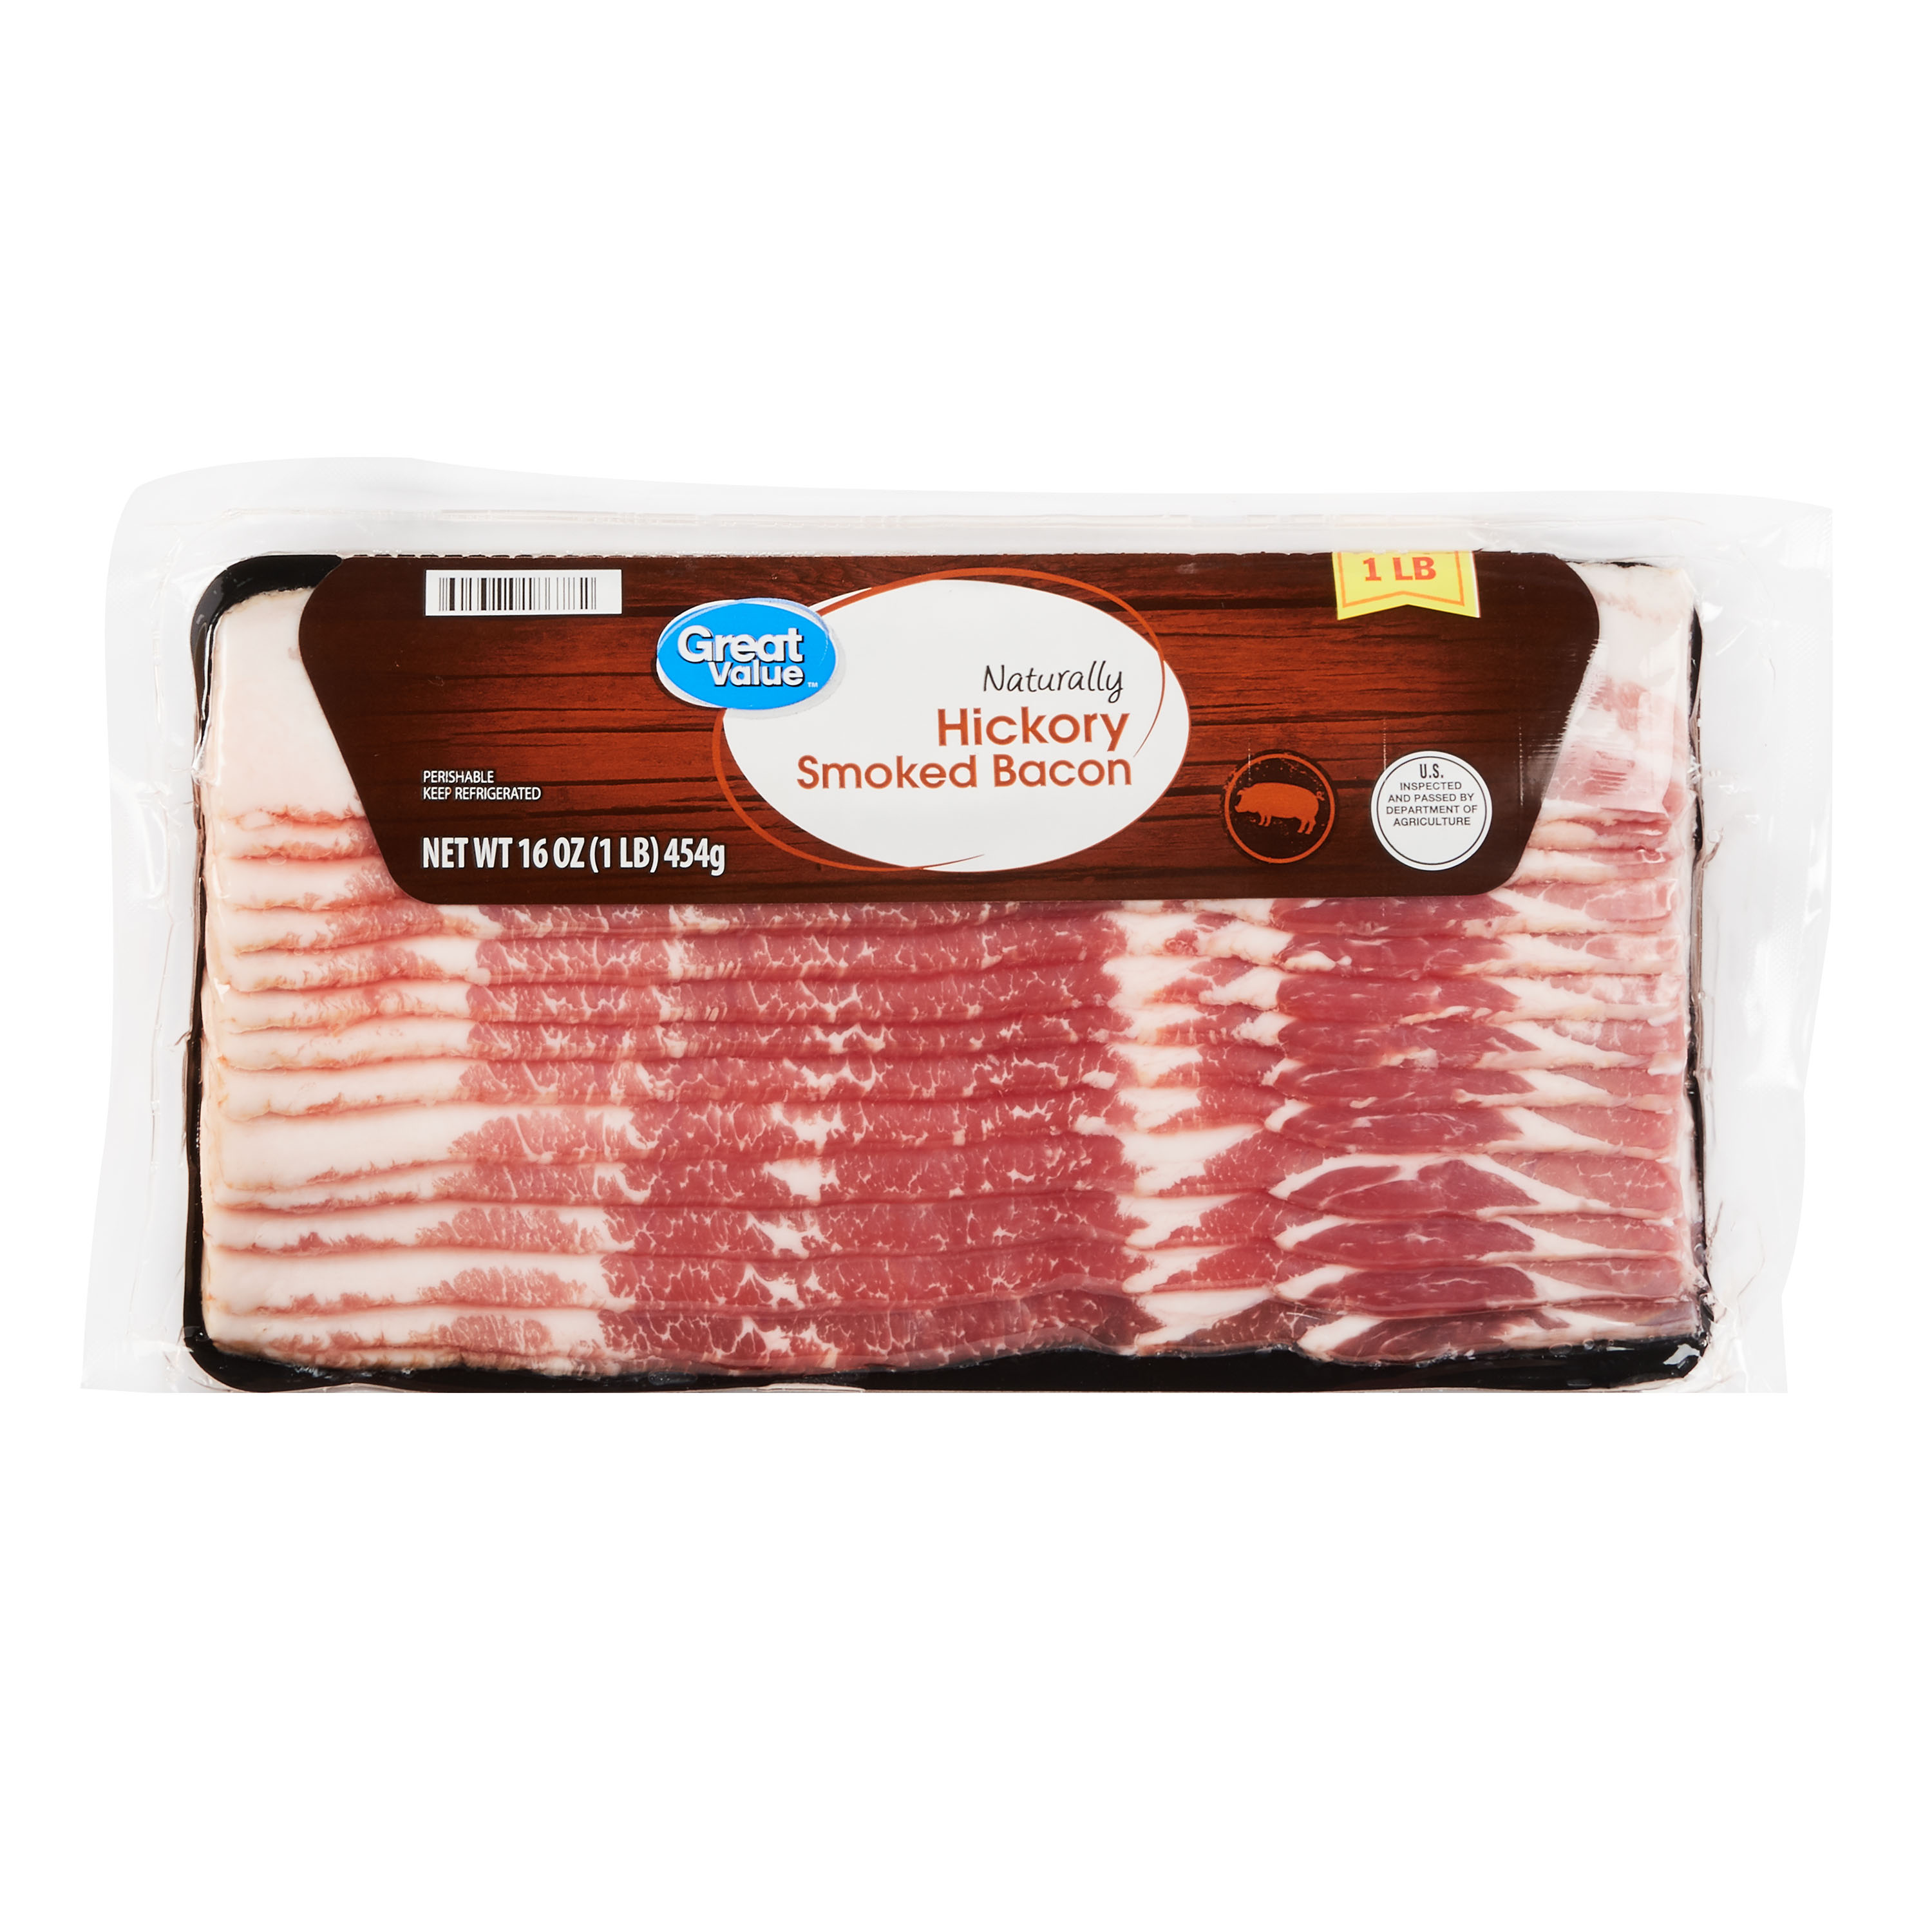 Great Value Naturally Hickory Smoked Bacon, 16 Oz Image